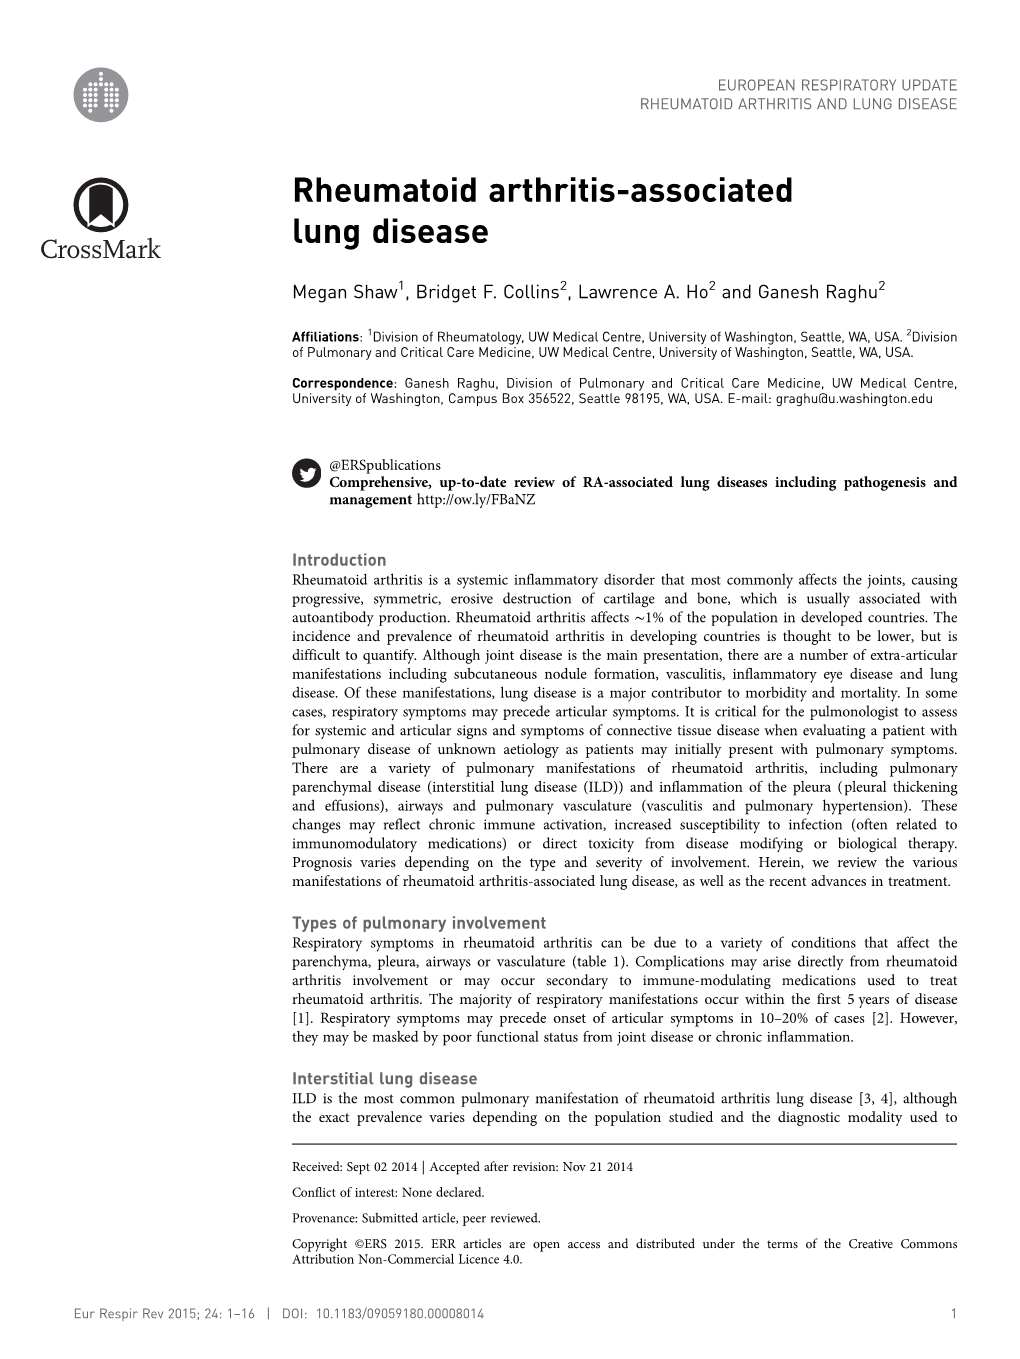 Rheumatoid Arthritis-Associated Lung'disease